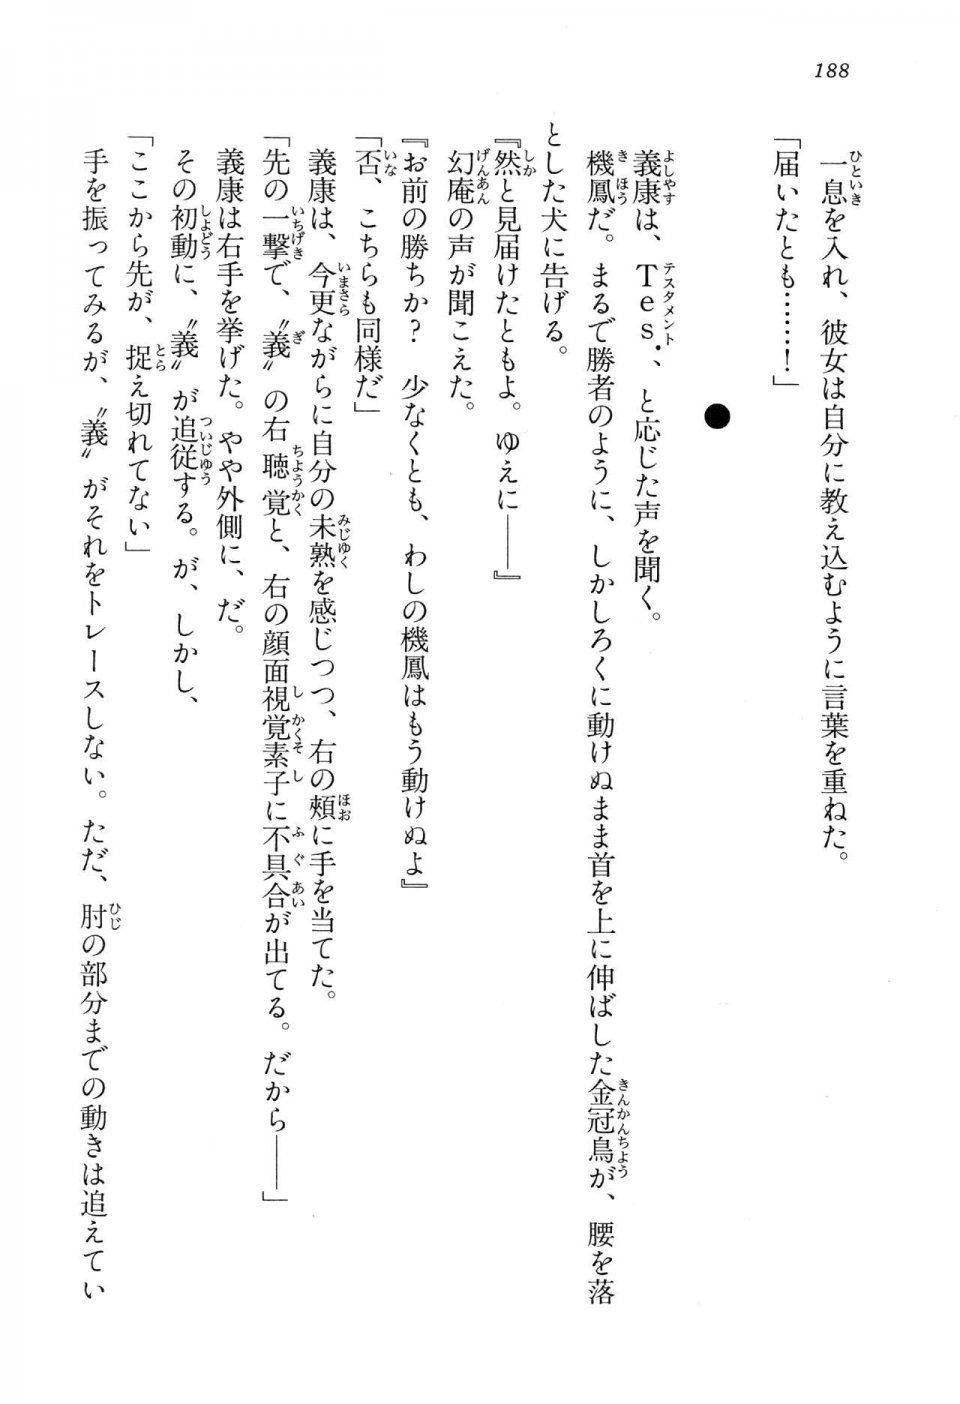 Kyoukai Senjou no Horizon LN Vol 15(6C) Part 1 - Photo #188